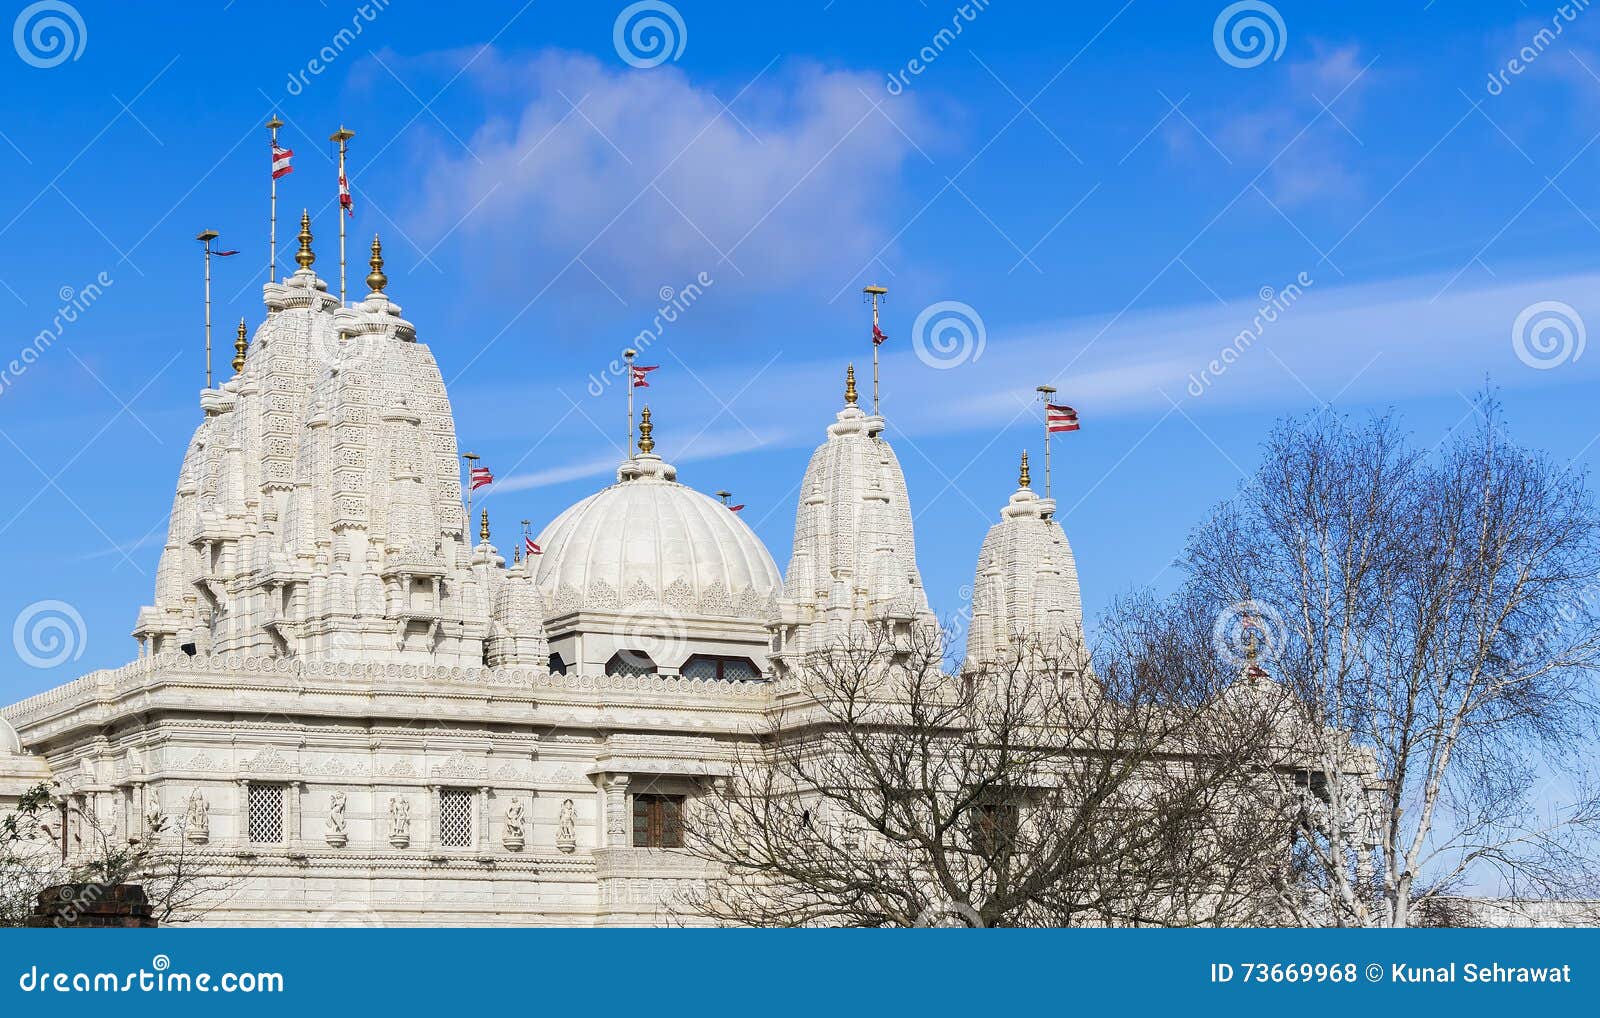 hindu temple baps shri swaminarayan mandir in london, united kin